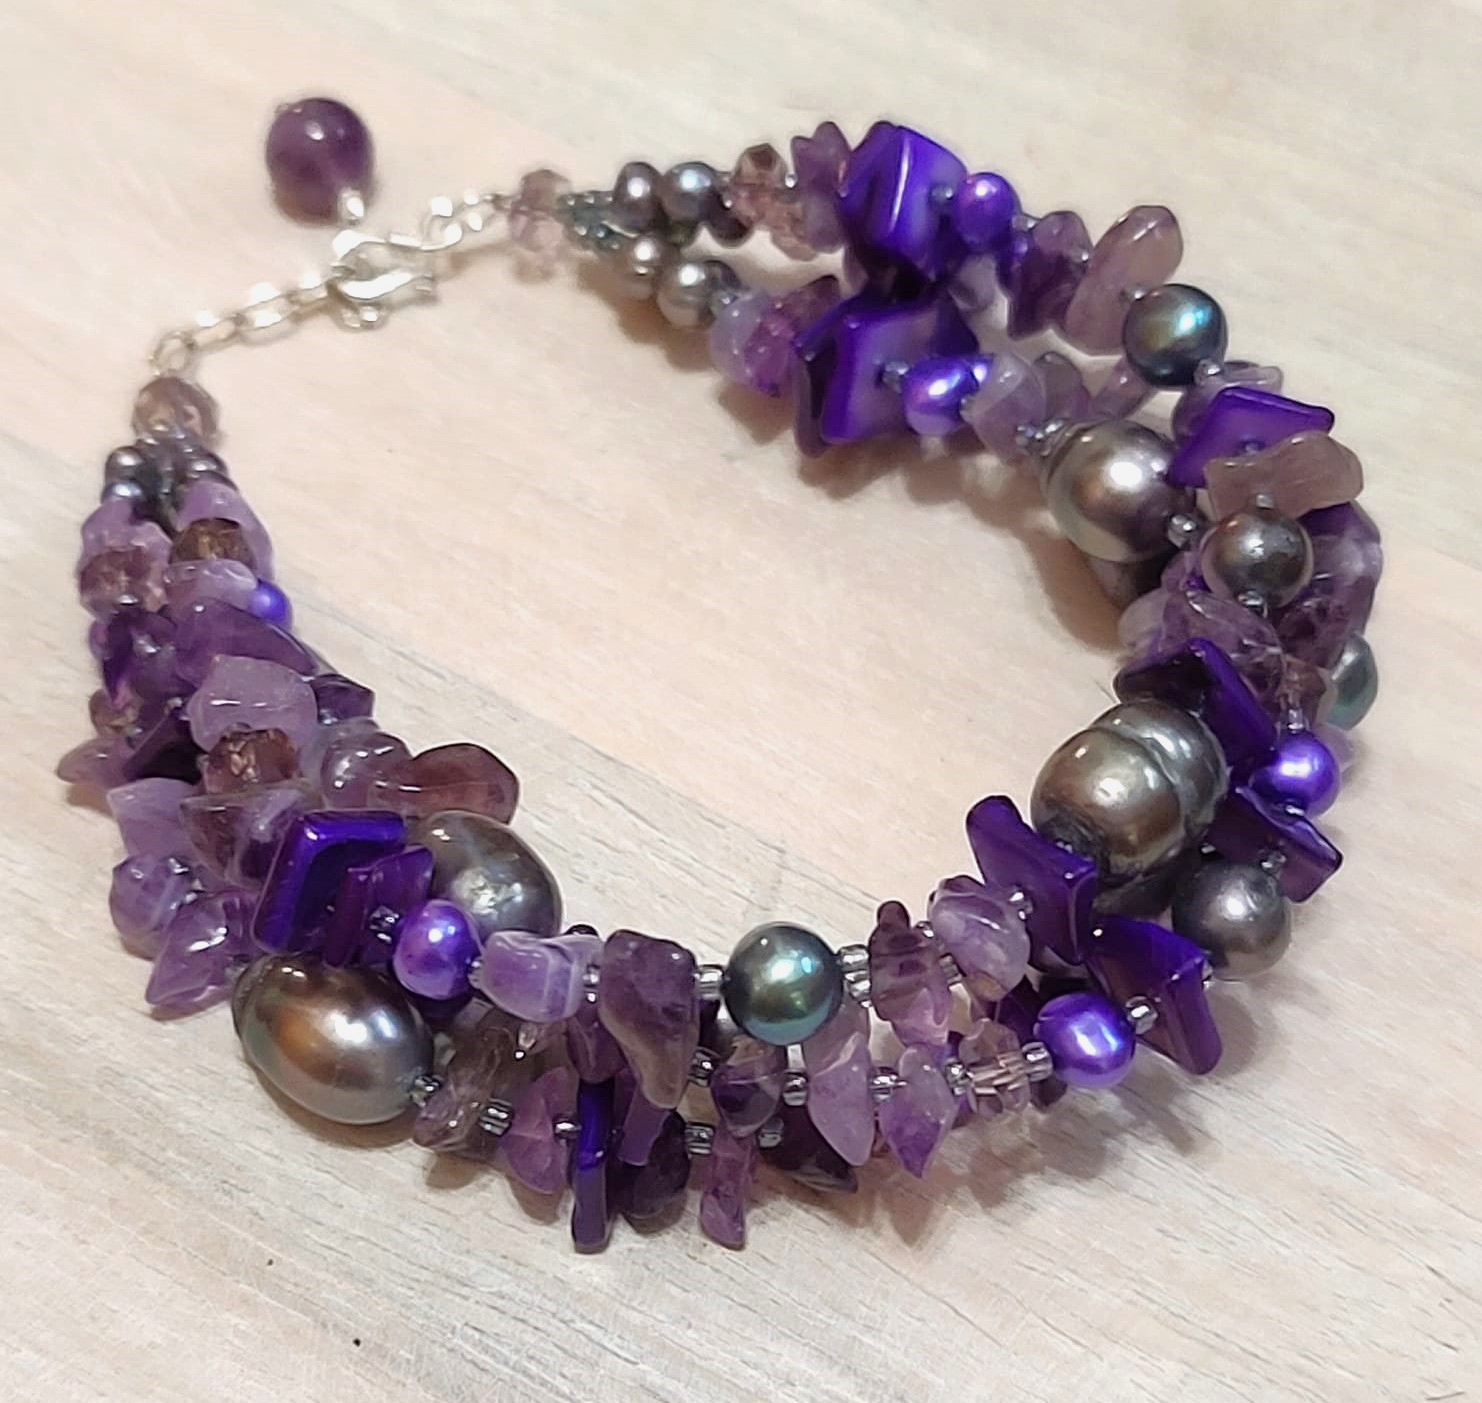 Amethyst bracelet, gemstones, dyed freshwater pearls and crystals multit row